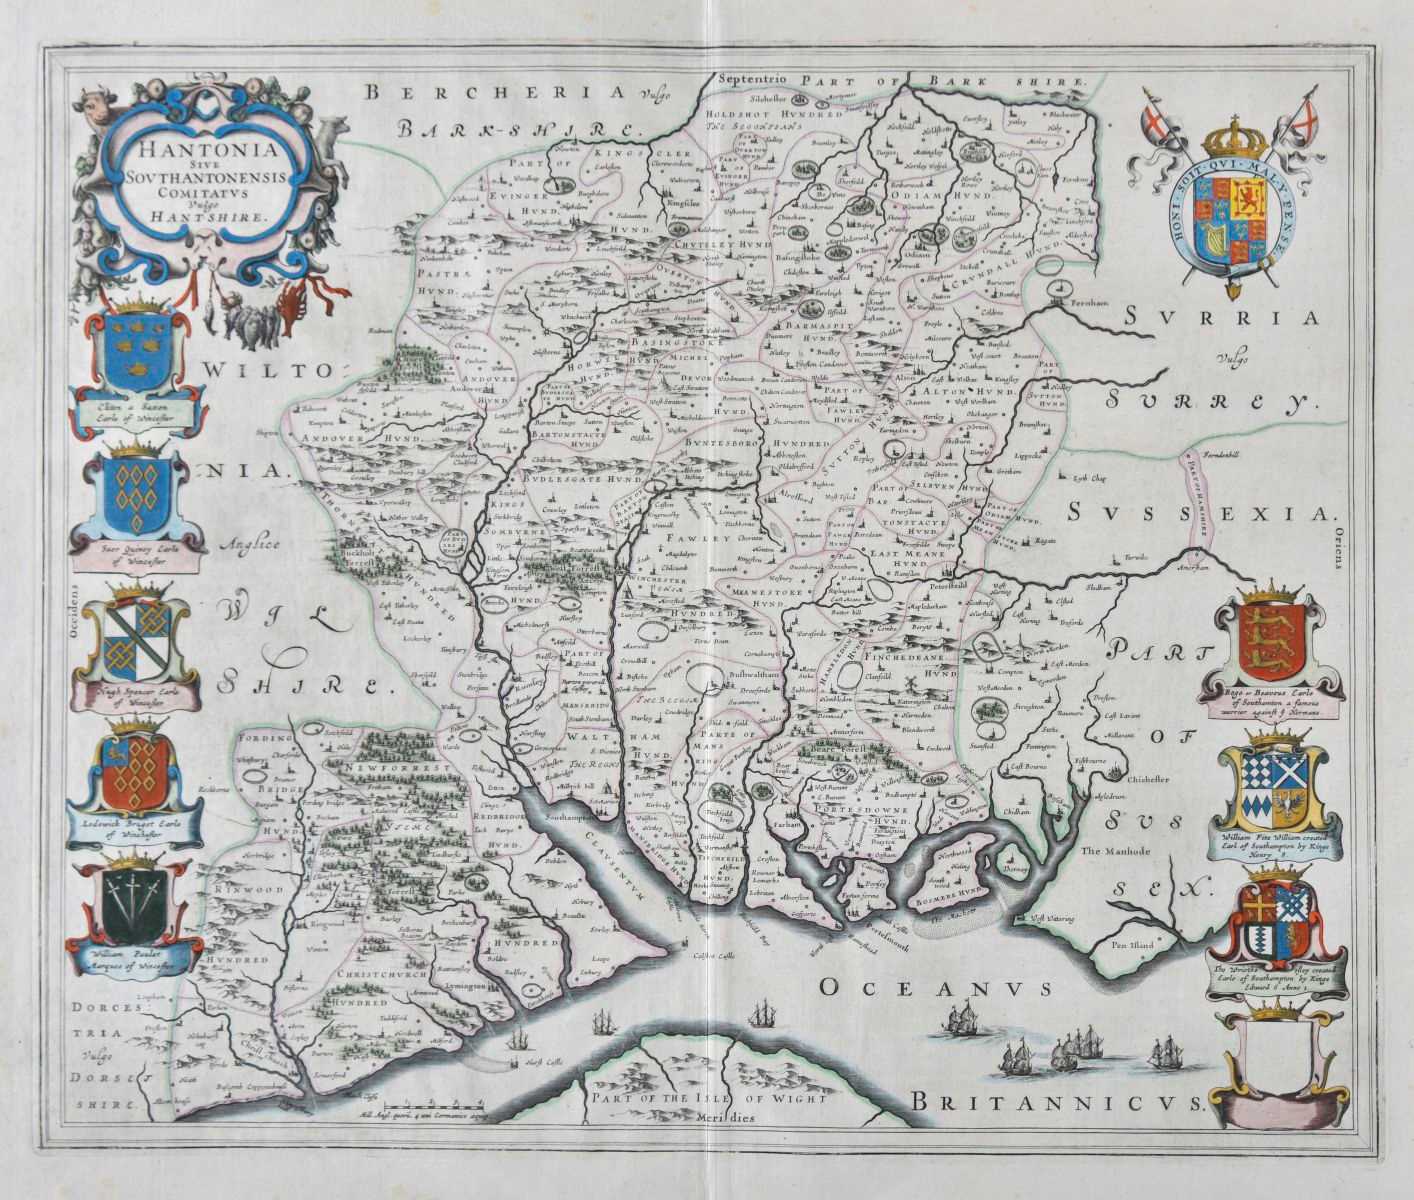 Lot 45 - Hampshire. Blaeu (Johannes), Hantonia sive Southantonensis comitatus vulgo Hantshire, circa 1645